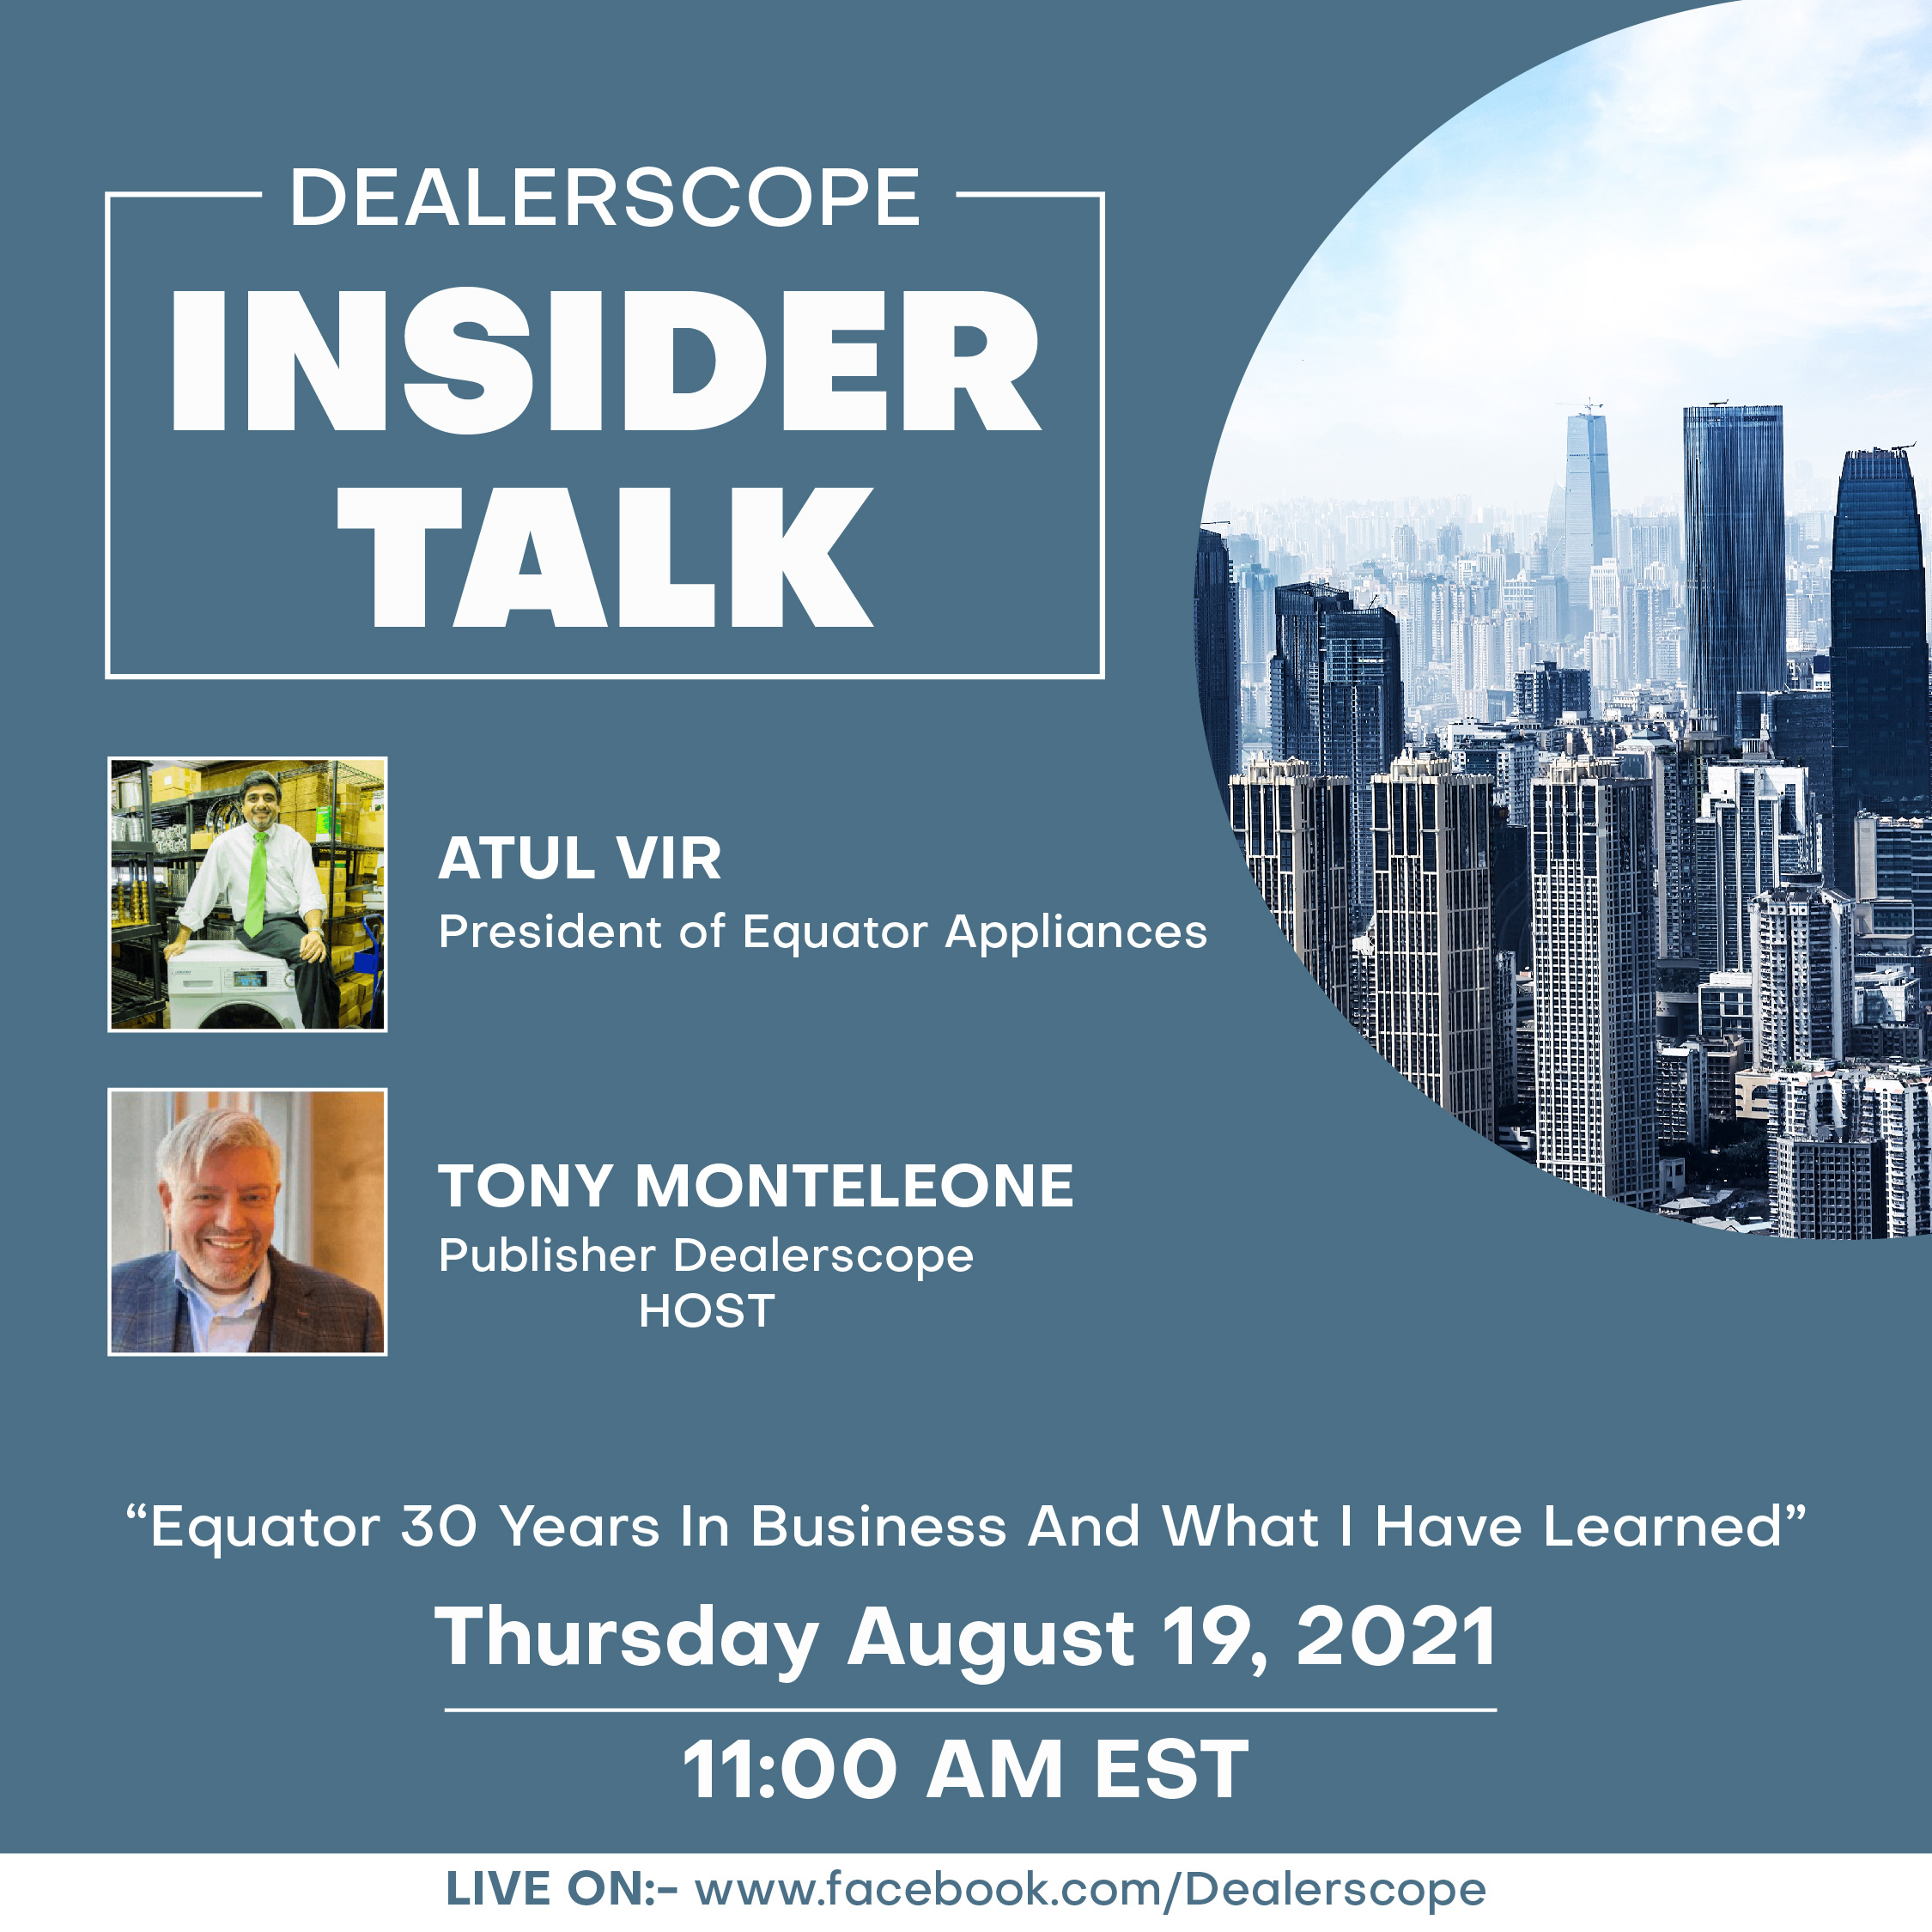 Dealerscope Insider Talk